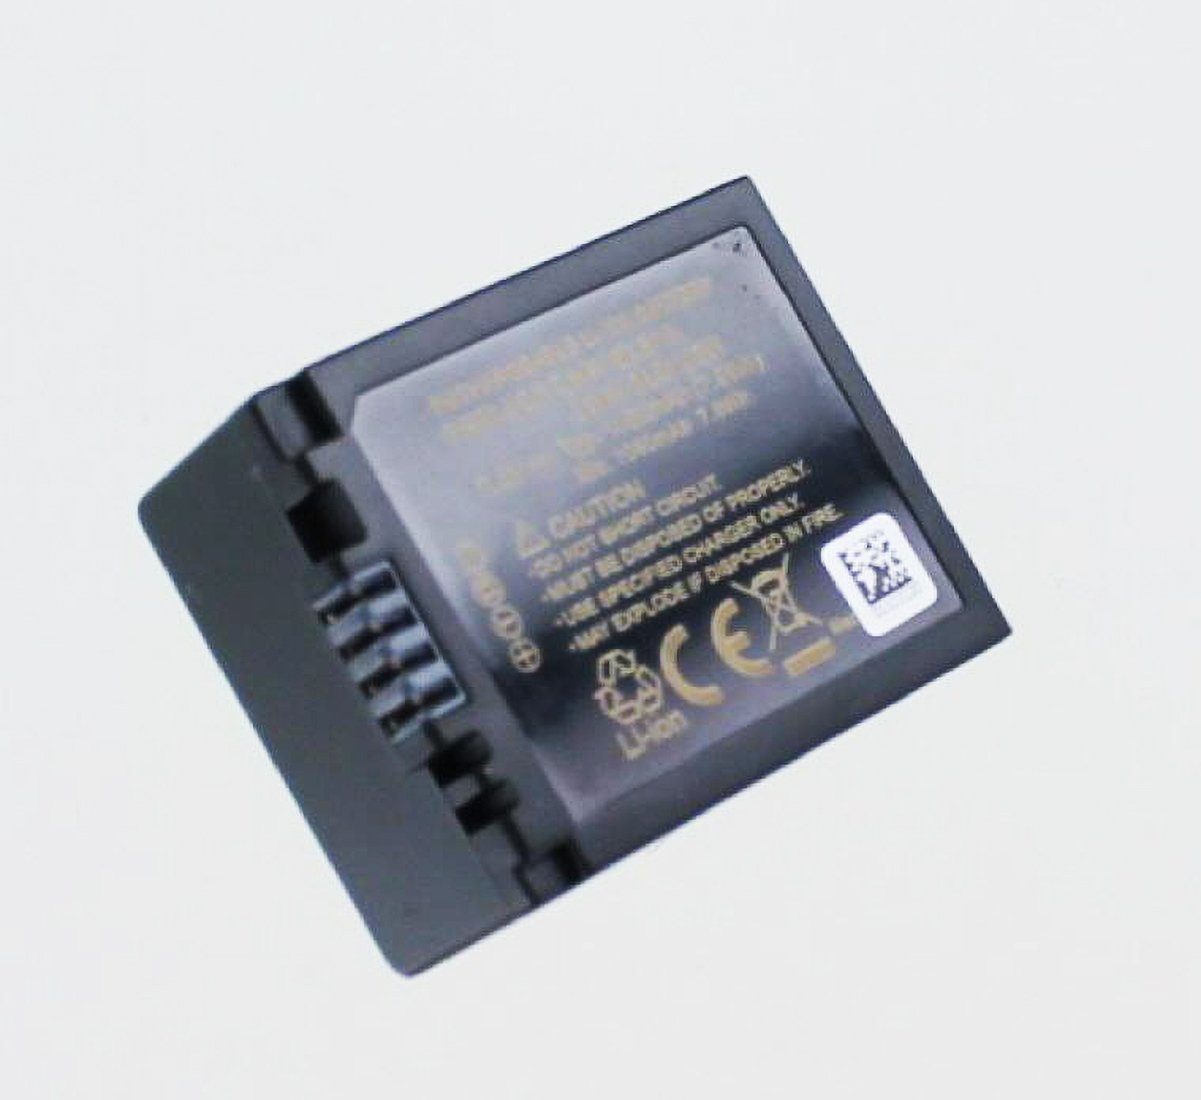 LUMIX AGI Akku Panasonic mit DMC-G1, -G2, -G10, Akku Akku kompatibel -GH1